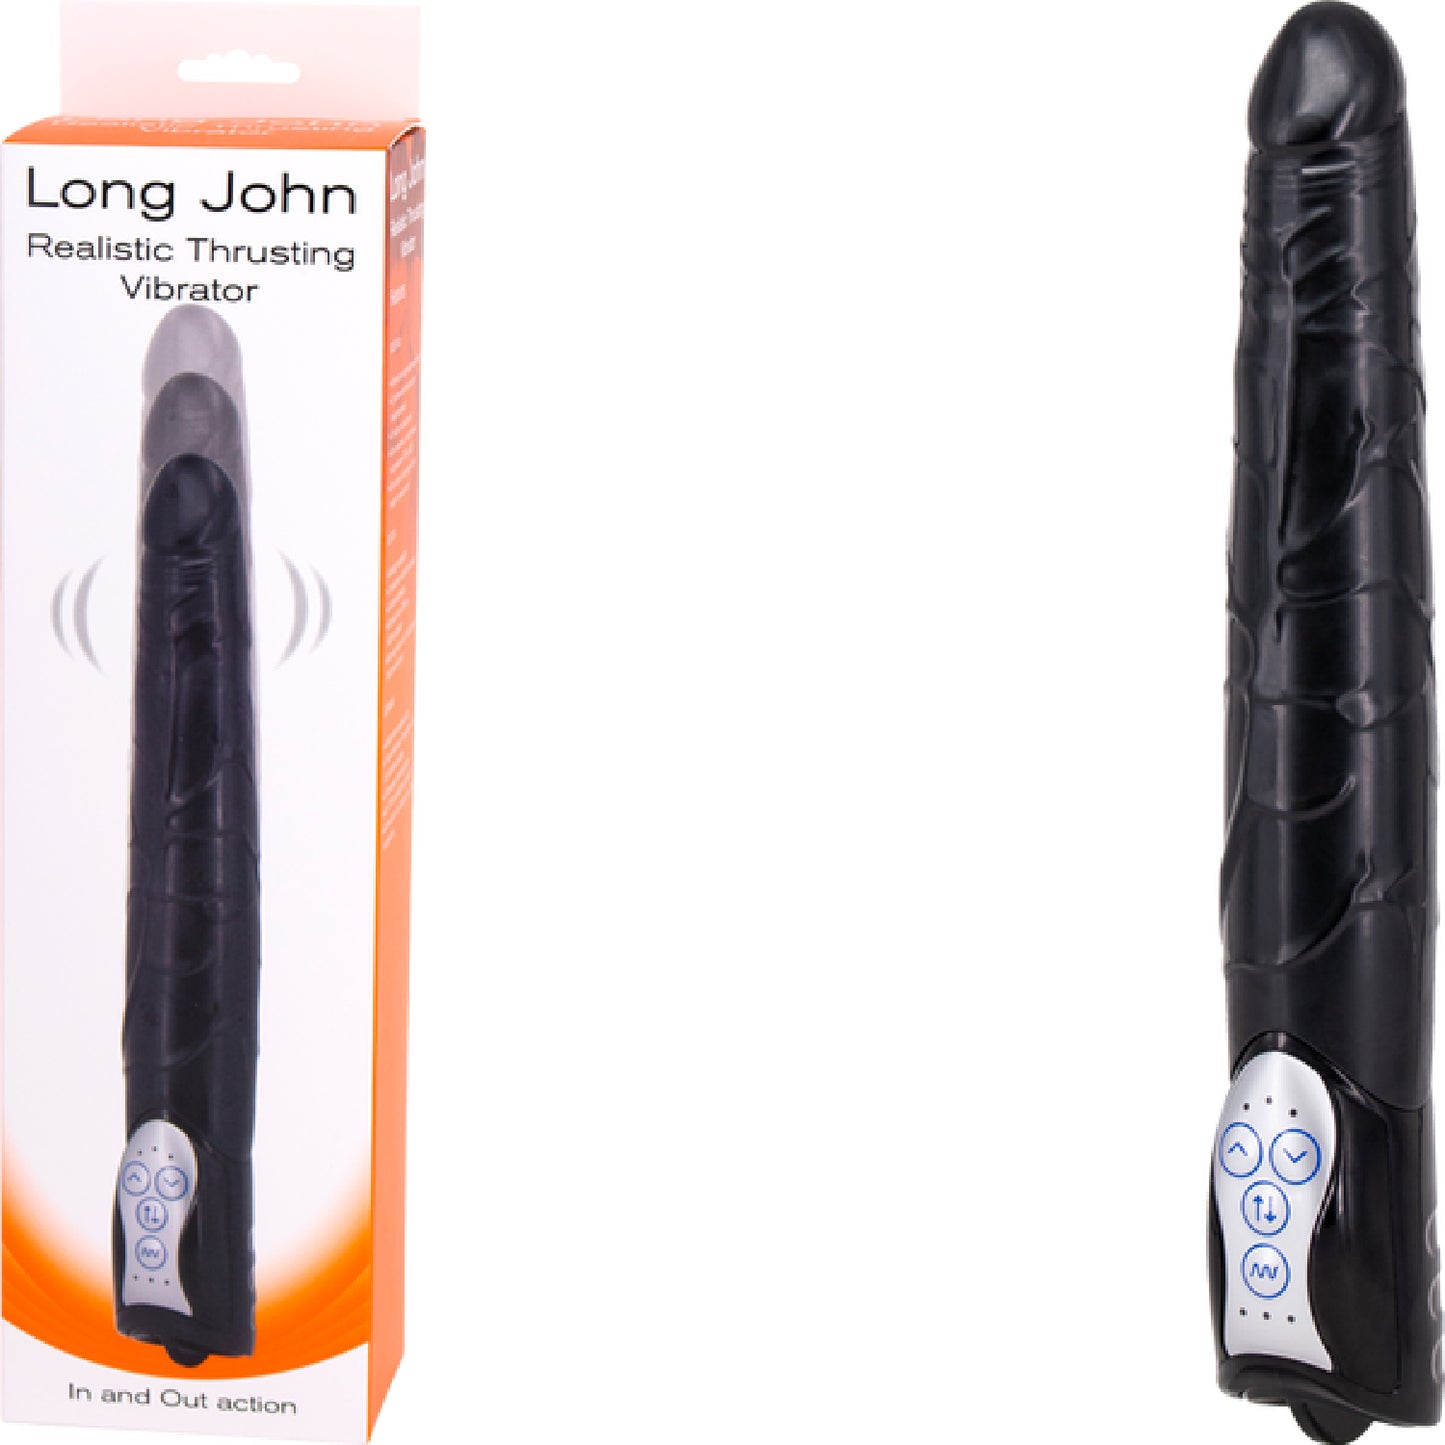 Long John Realistic Thrusting Vibrator - One Stop Adult Shop